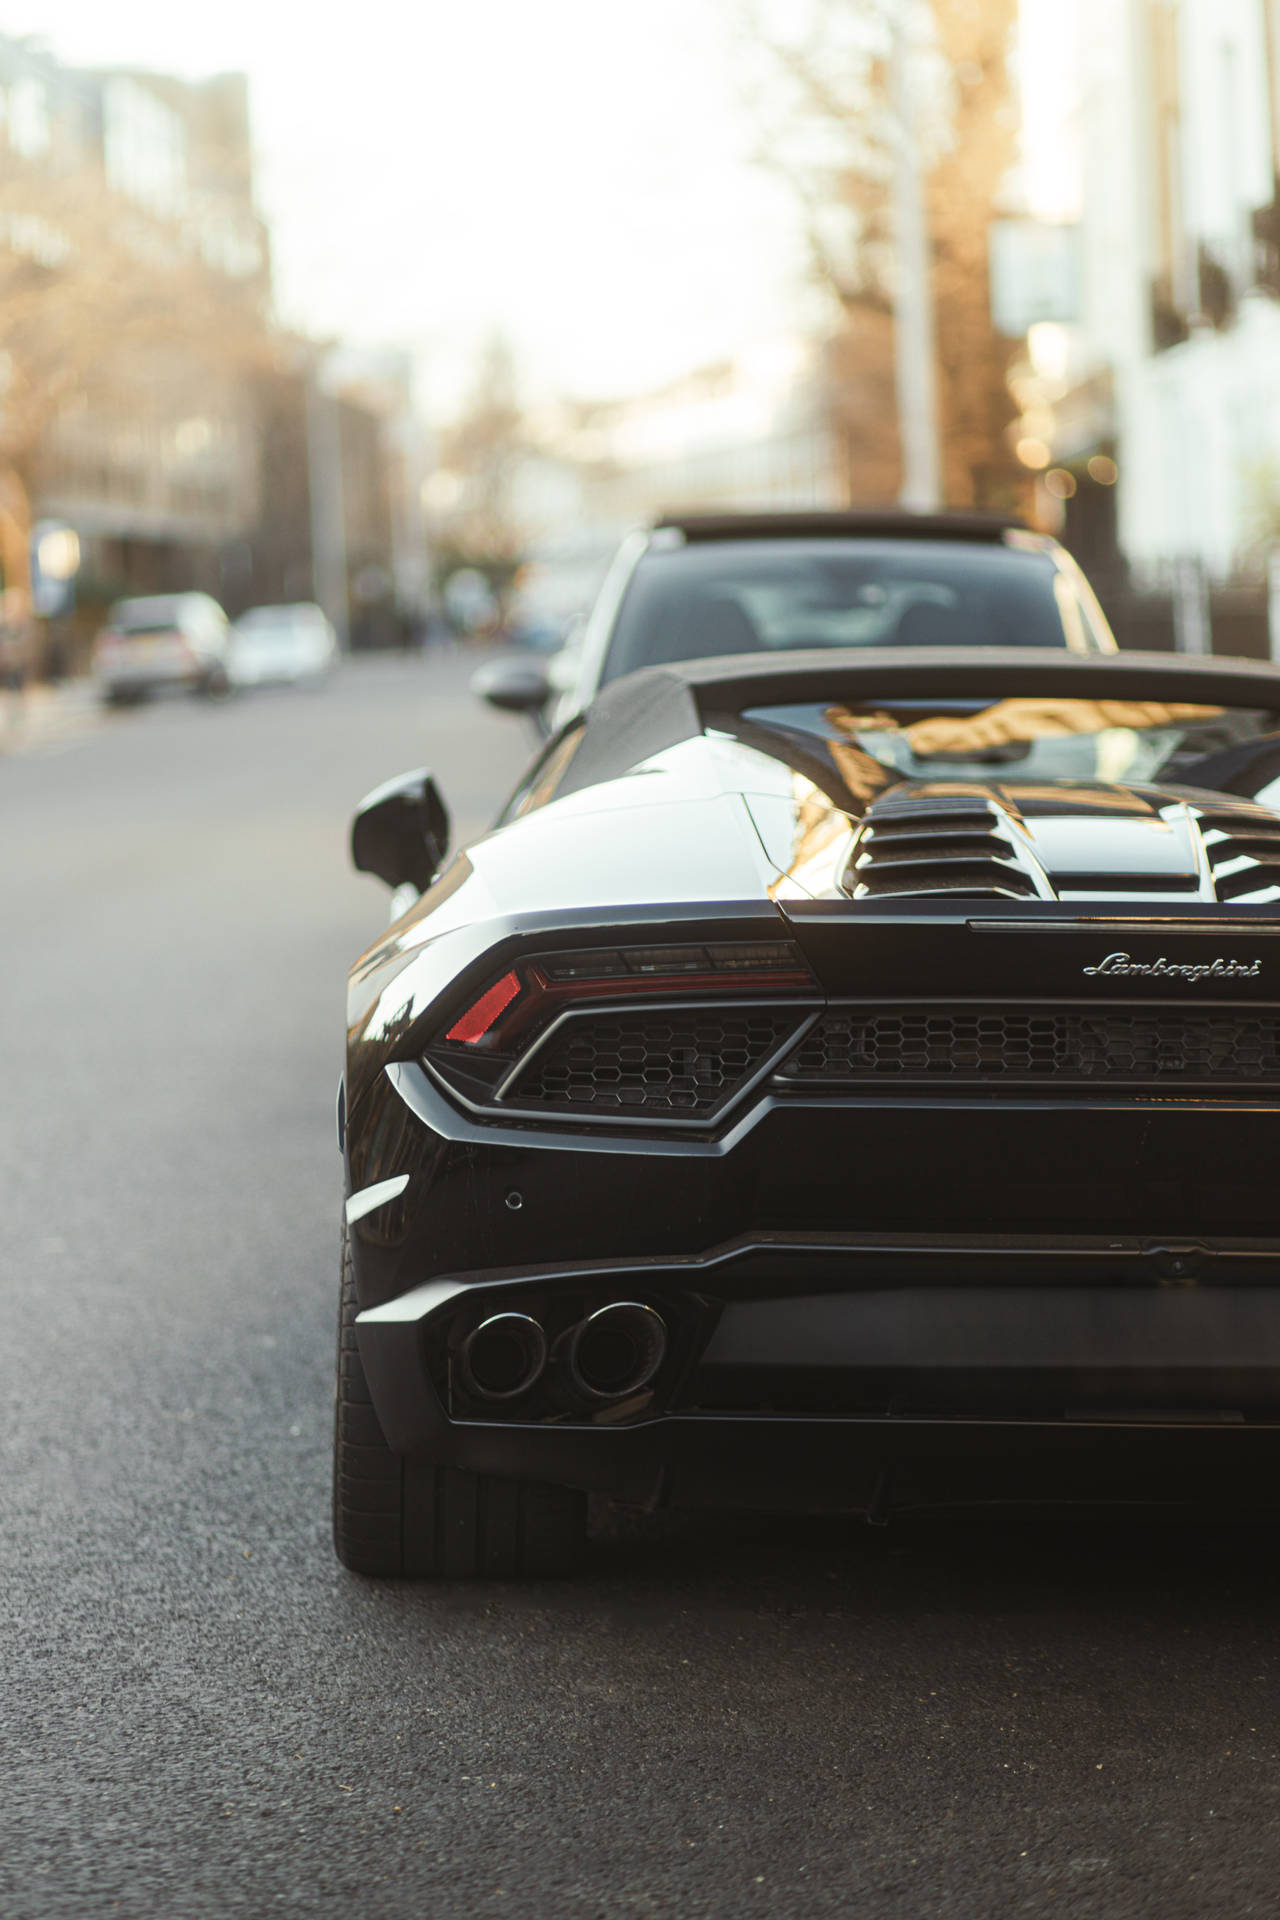 Black Lamborghini Luxury Car On The Road Background